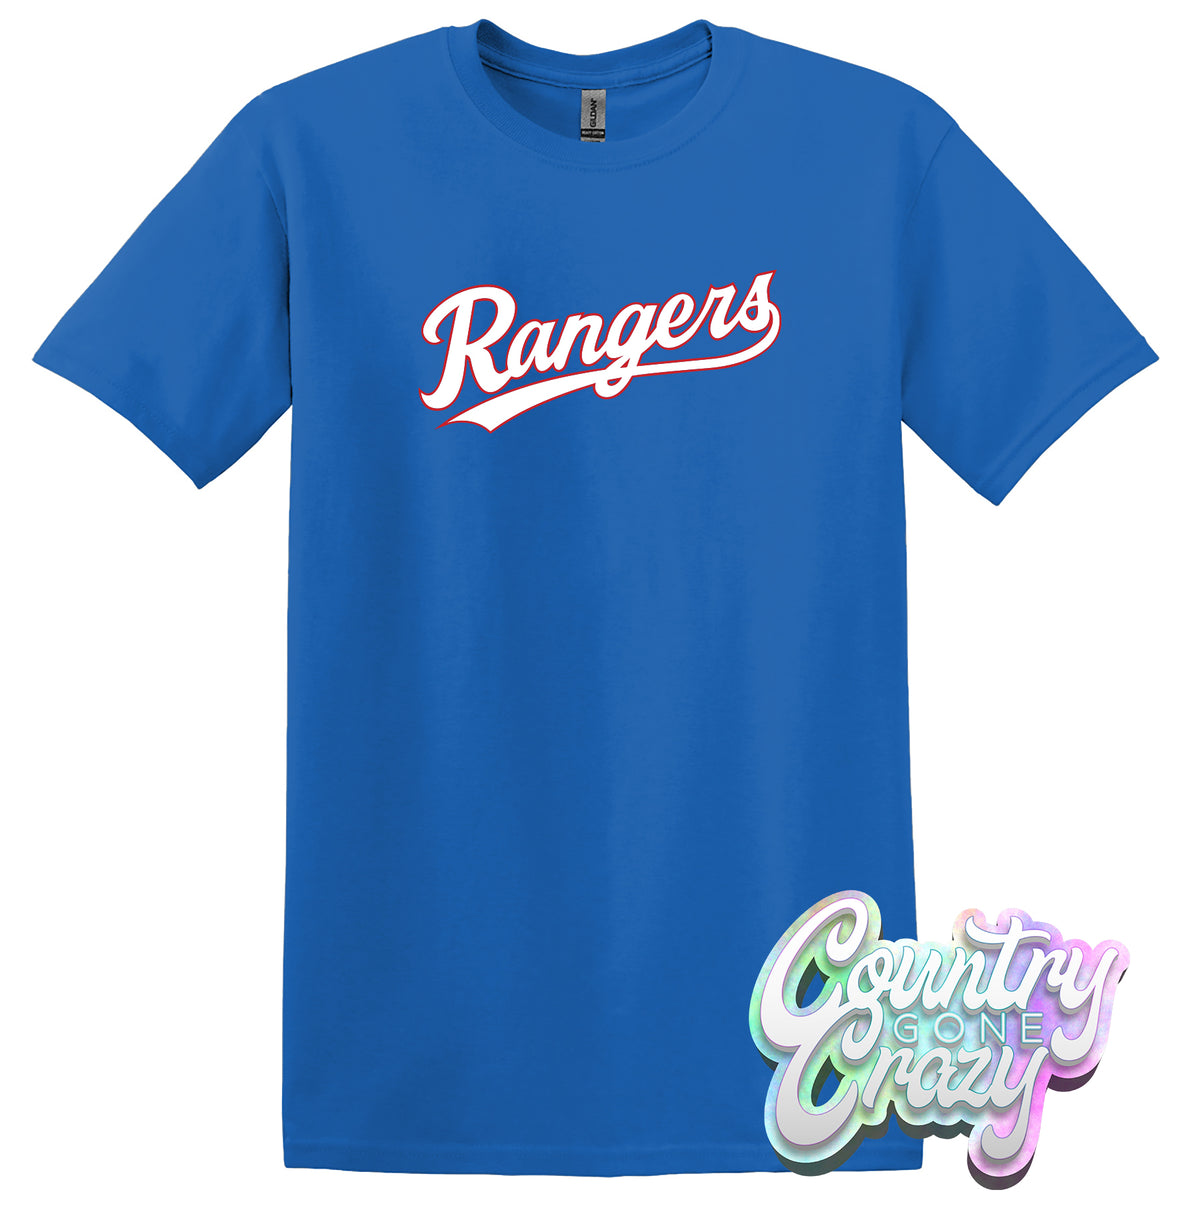 rangers powder blue shirt